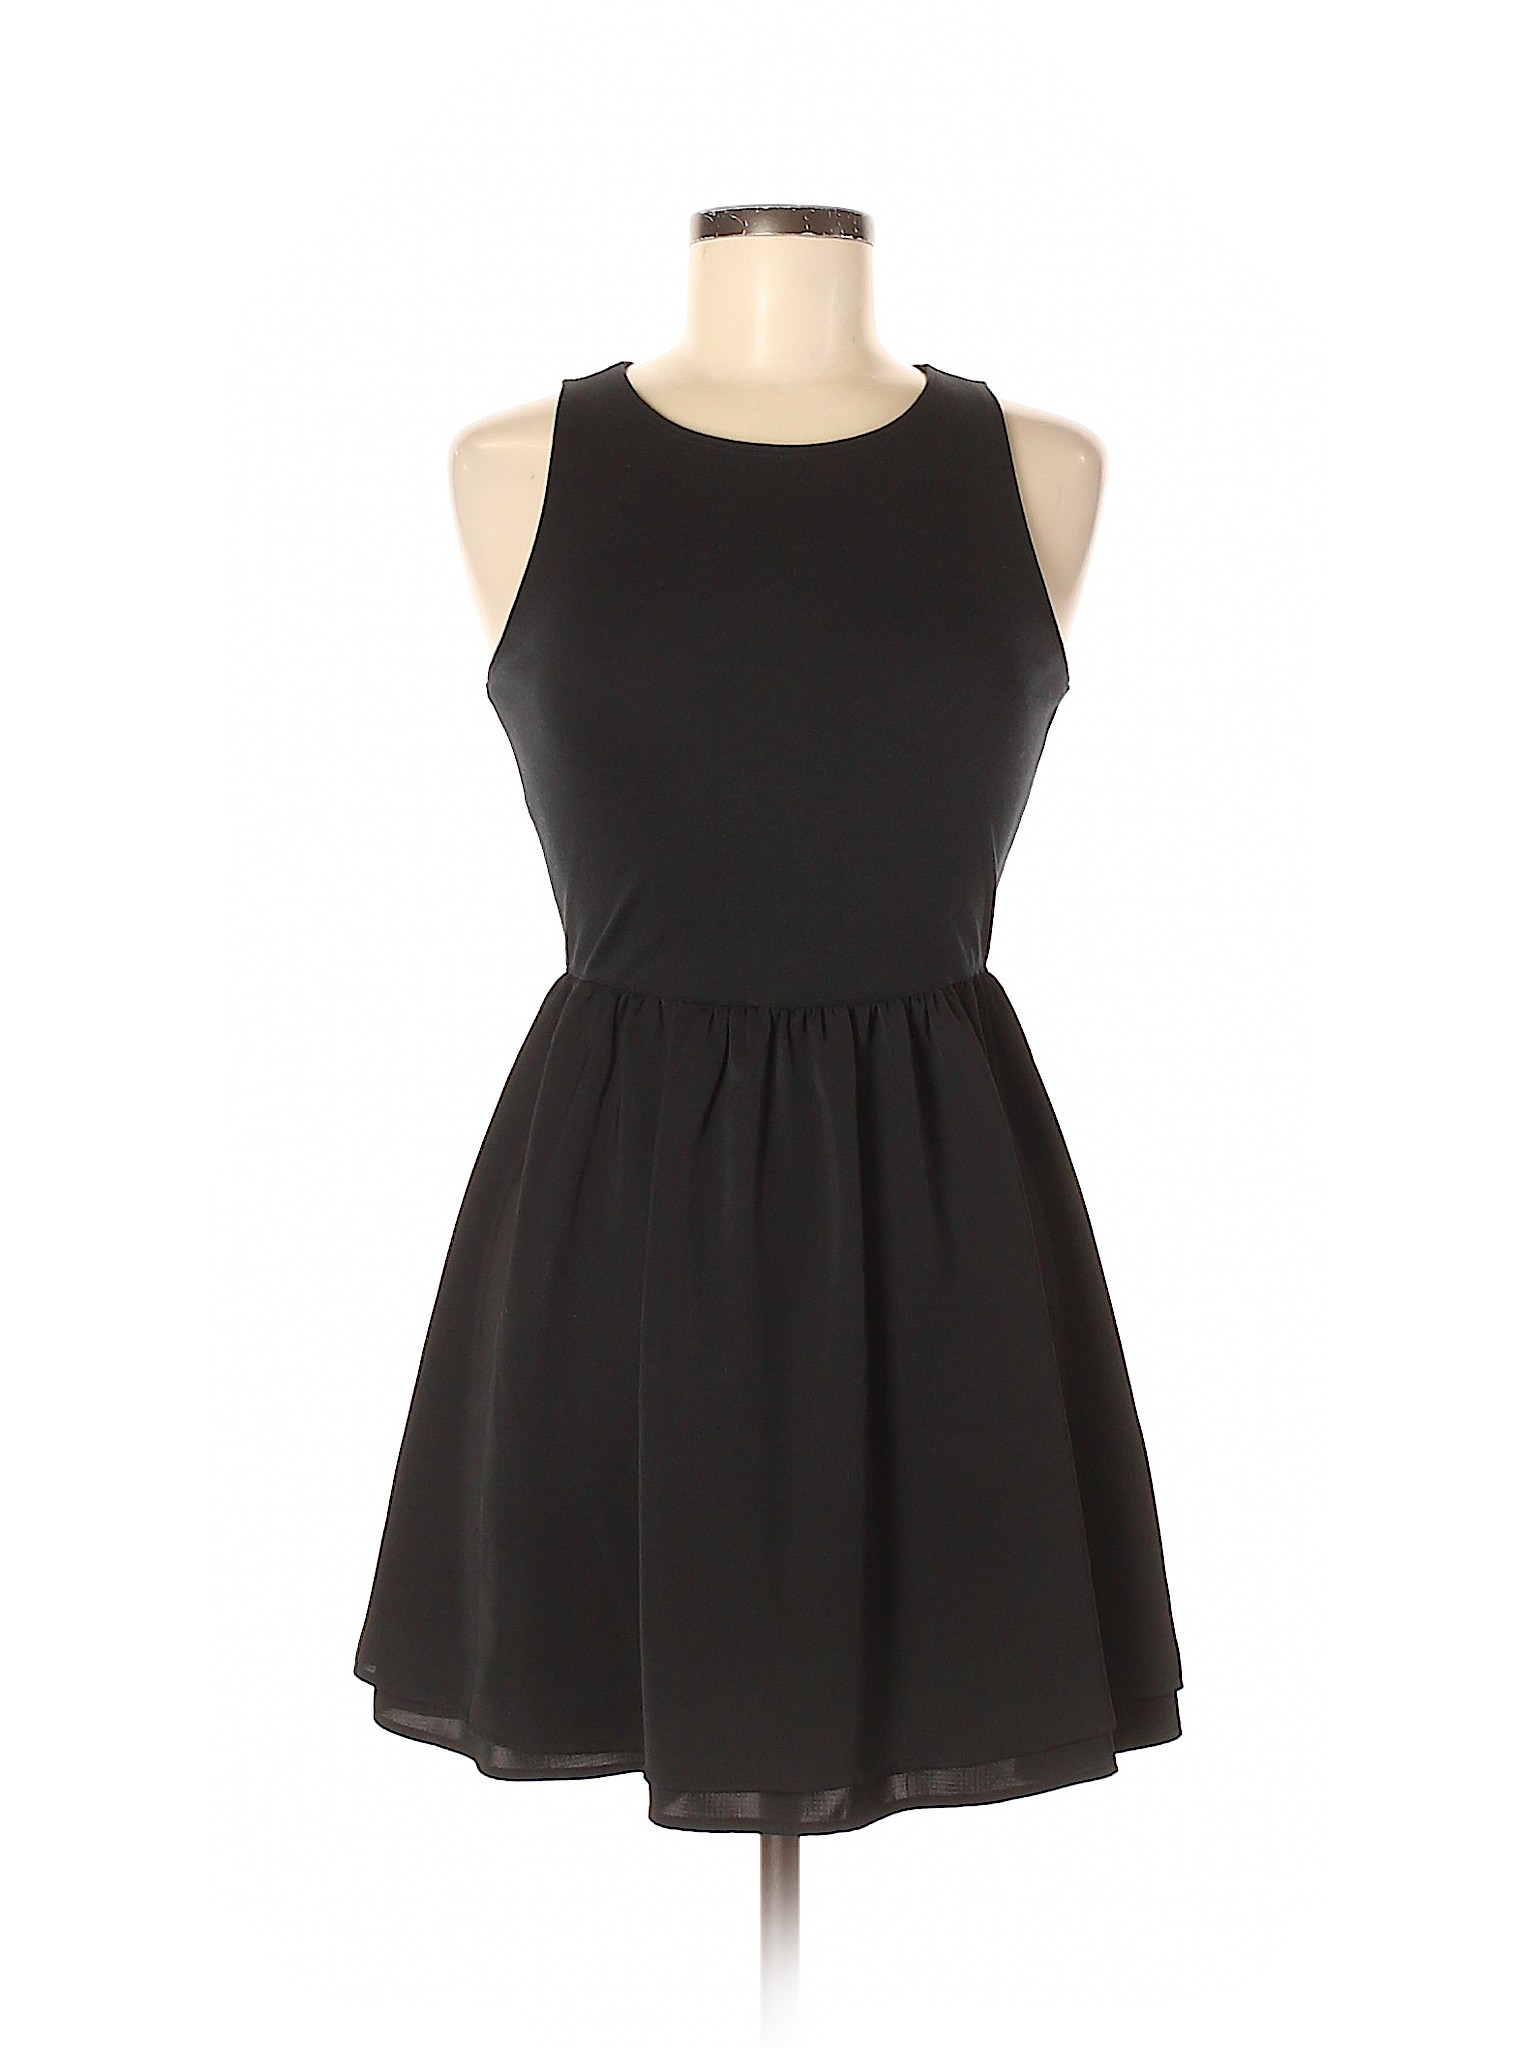 Abercrombie & Fitch Women Black Casual Dress Xs | eBay